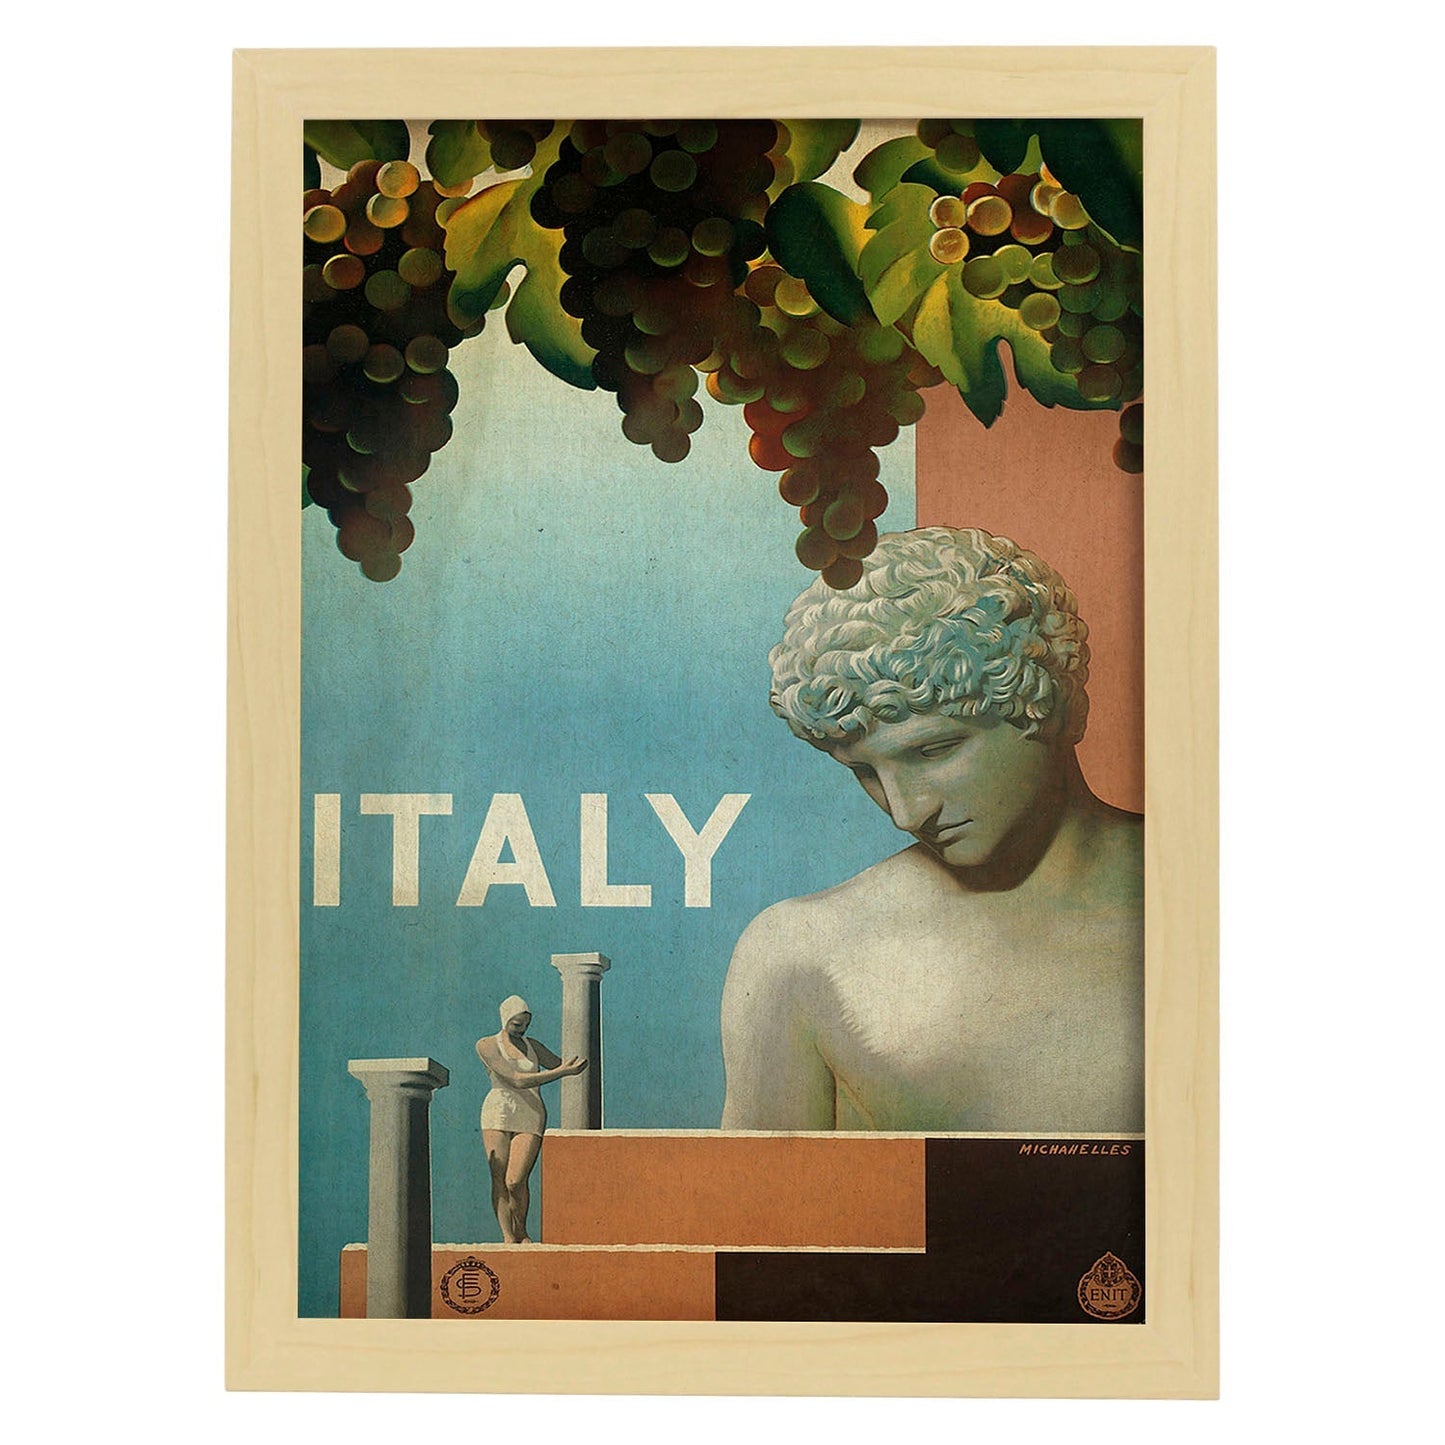 Poster vintage. Cartel vintage de Francia e Italia. Viaja a Italia.-Artwork-Nacnic-A3-Marco Madera clara-Nacnic Estudio SL